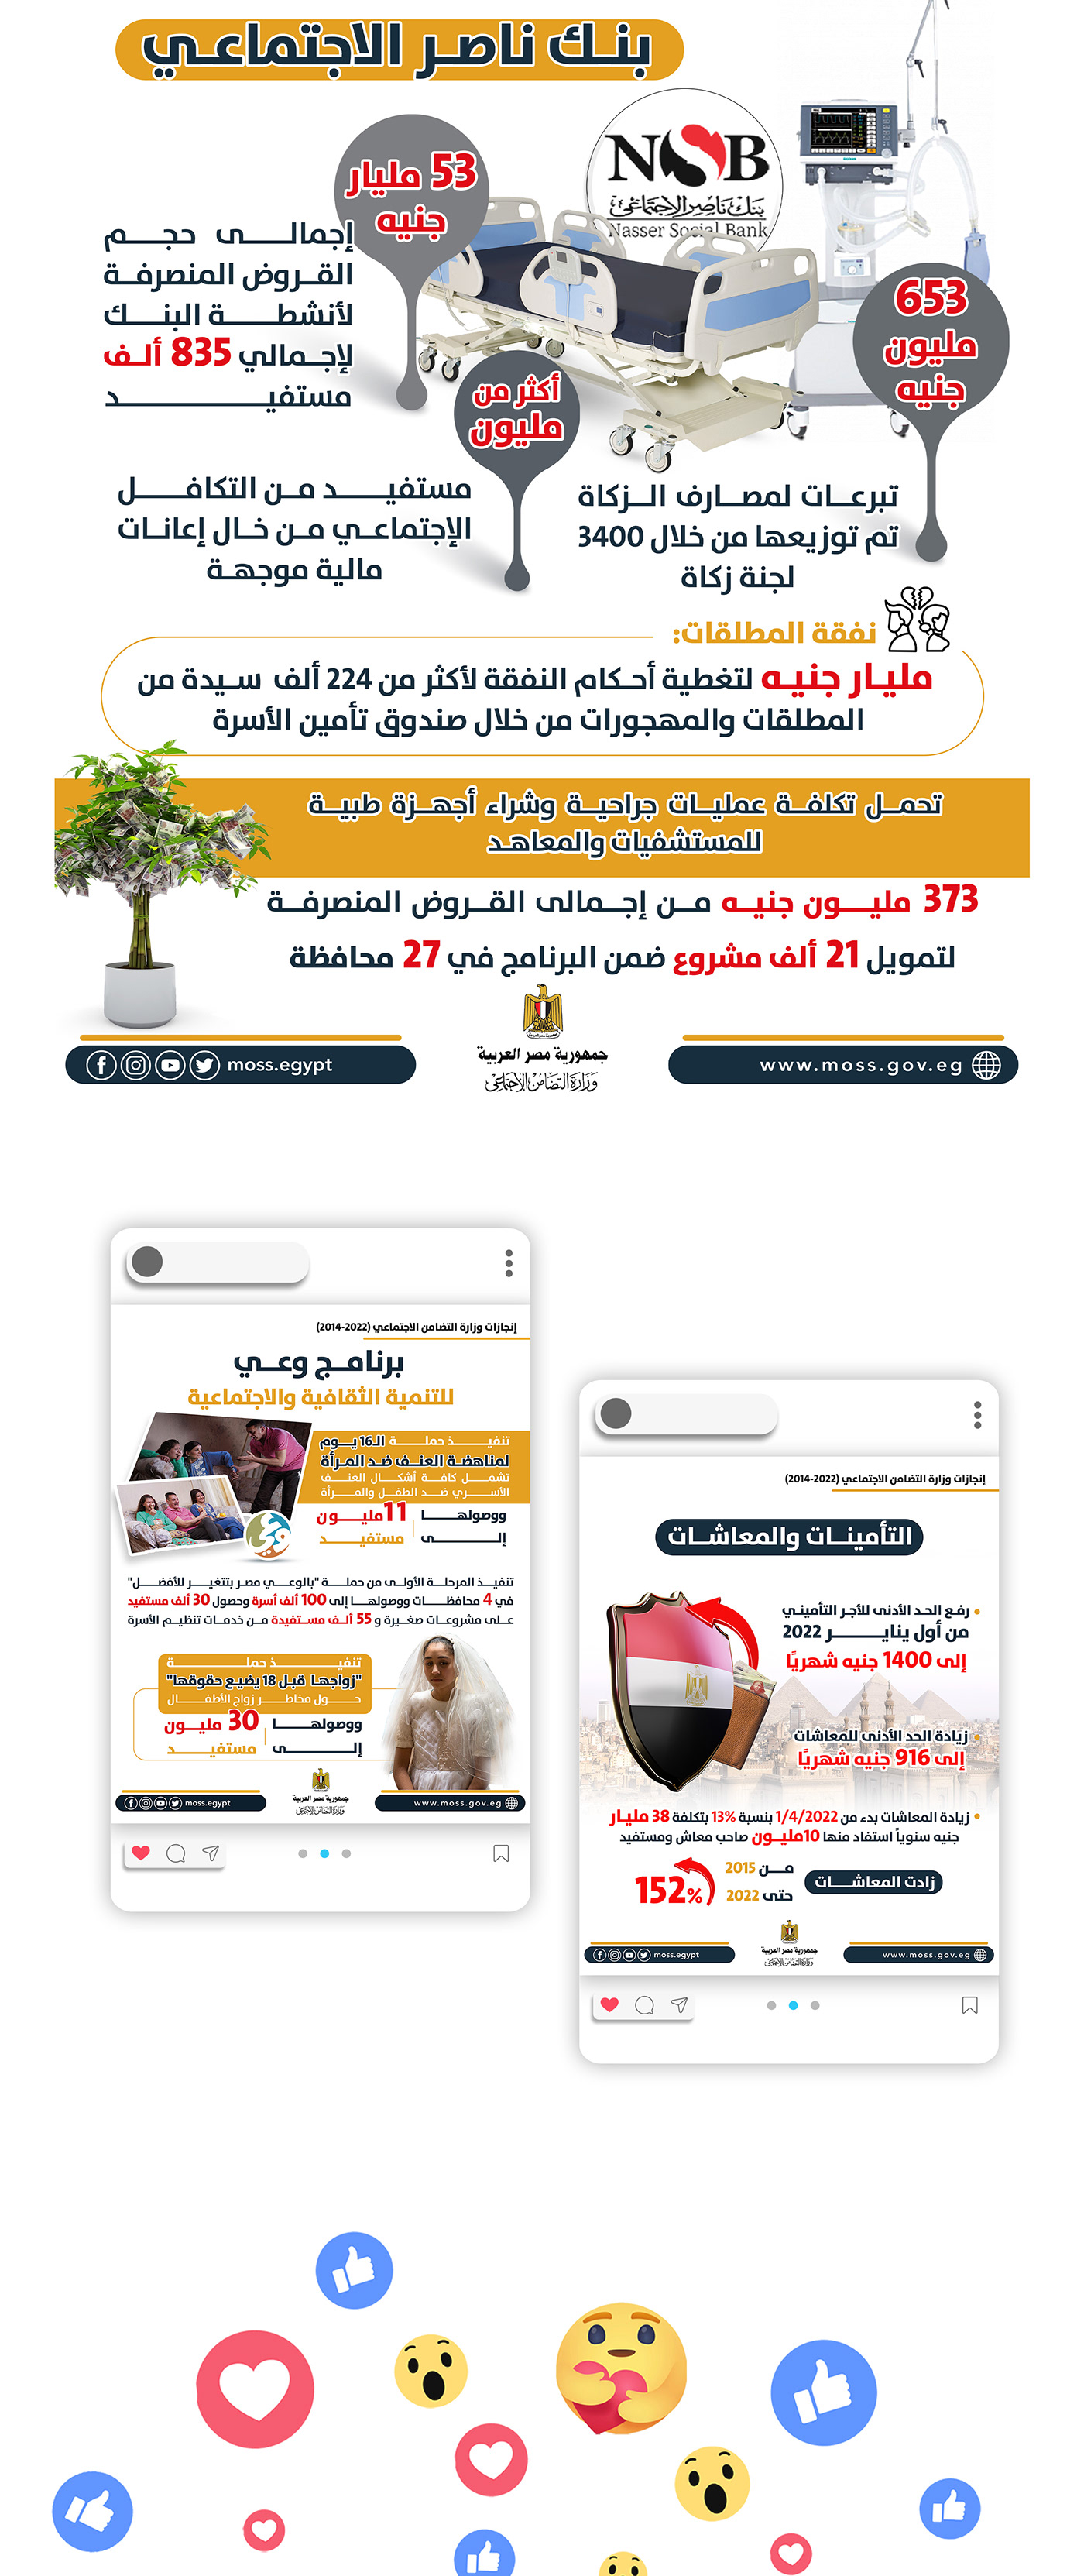 cairo designer egypt infographic Social media post Socialmedia انفوجرافيك تصميم جرافيك سوشيال ميديا